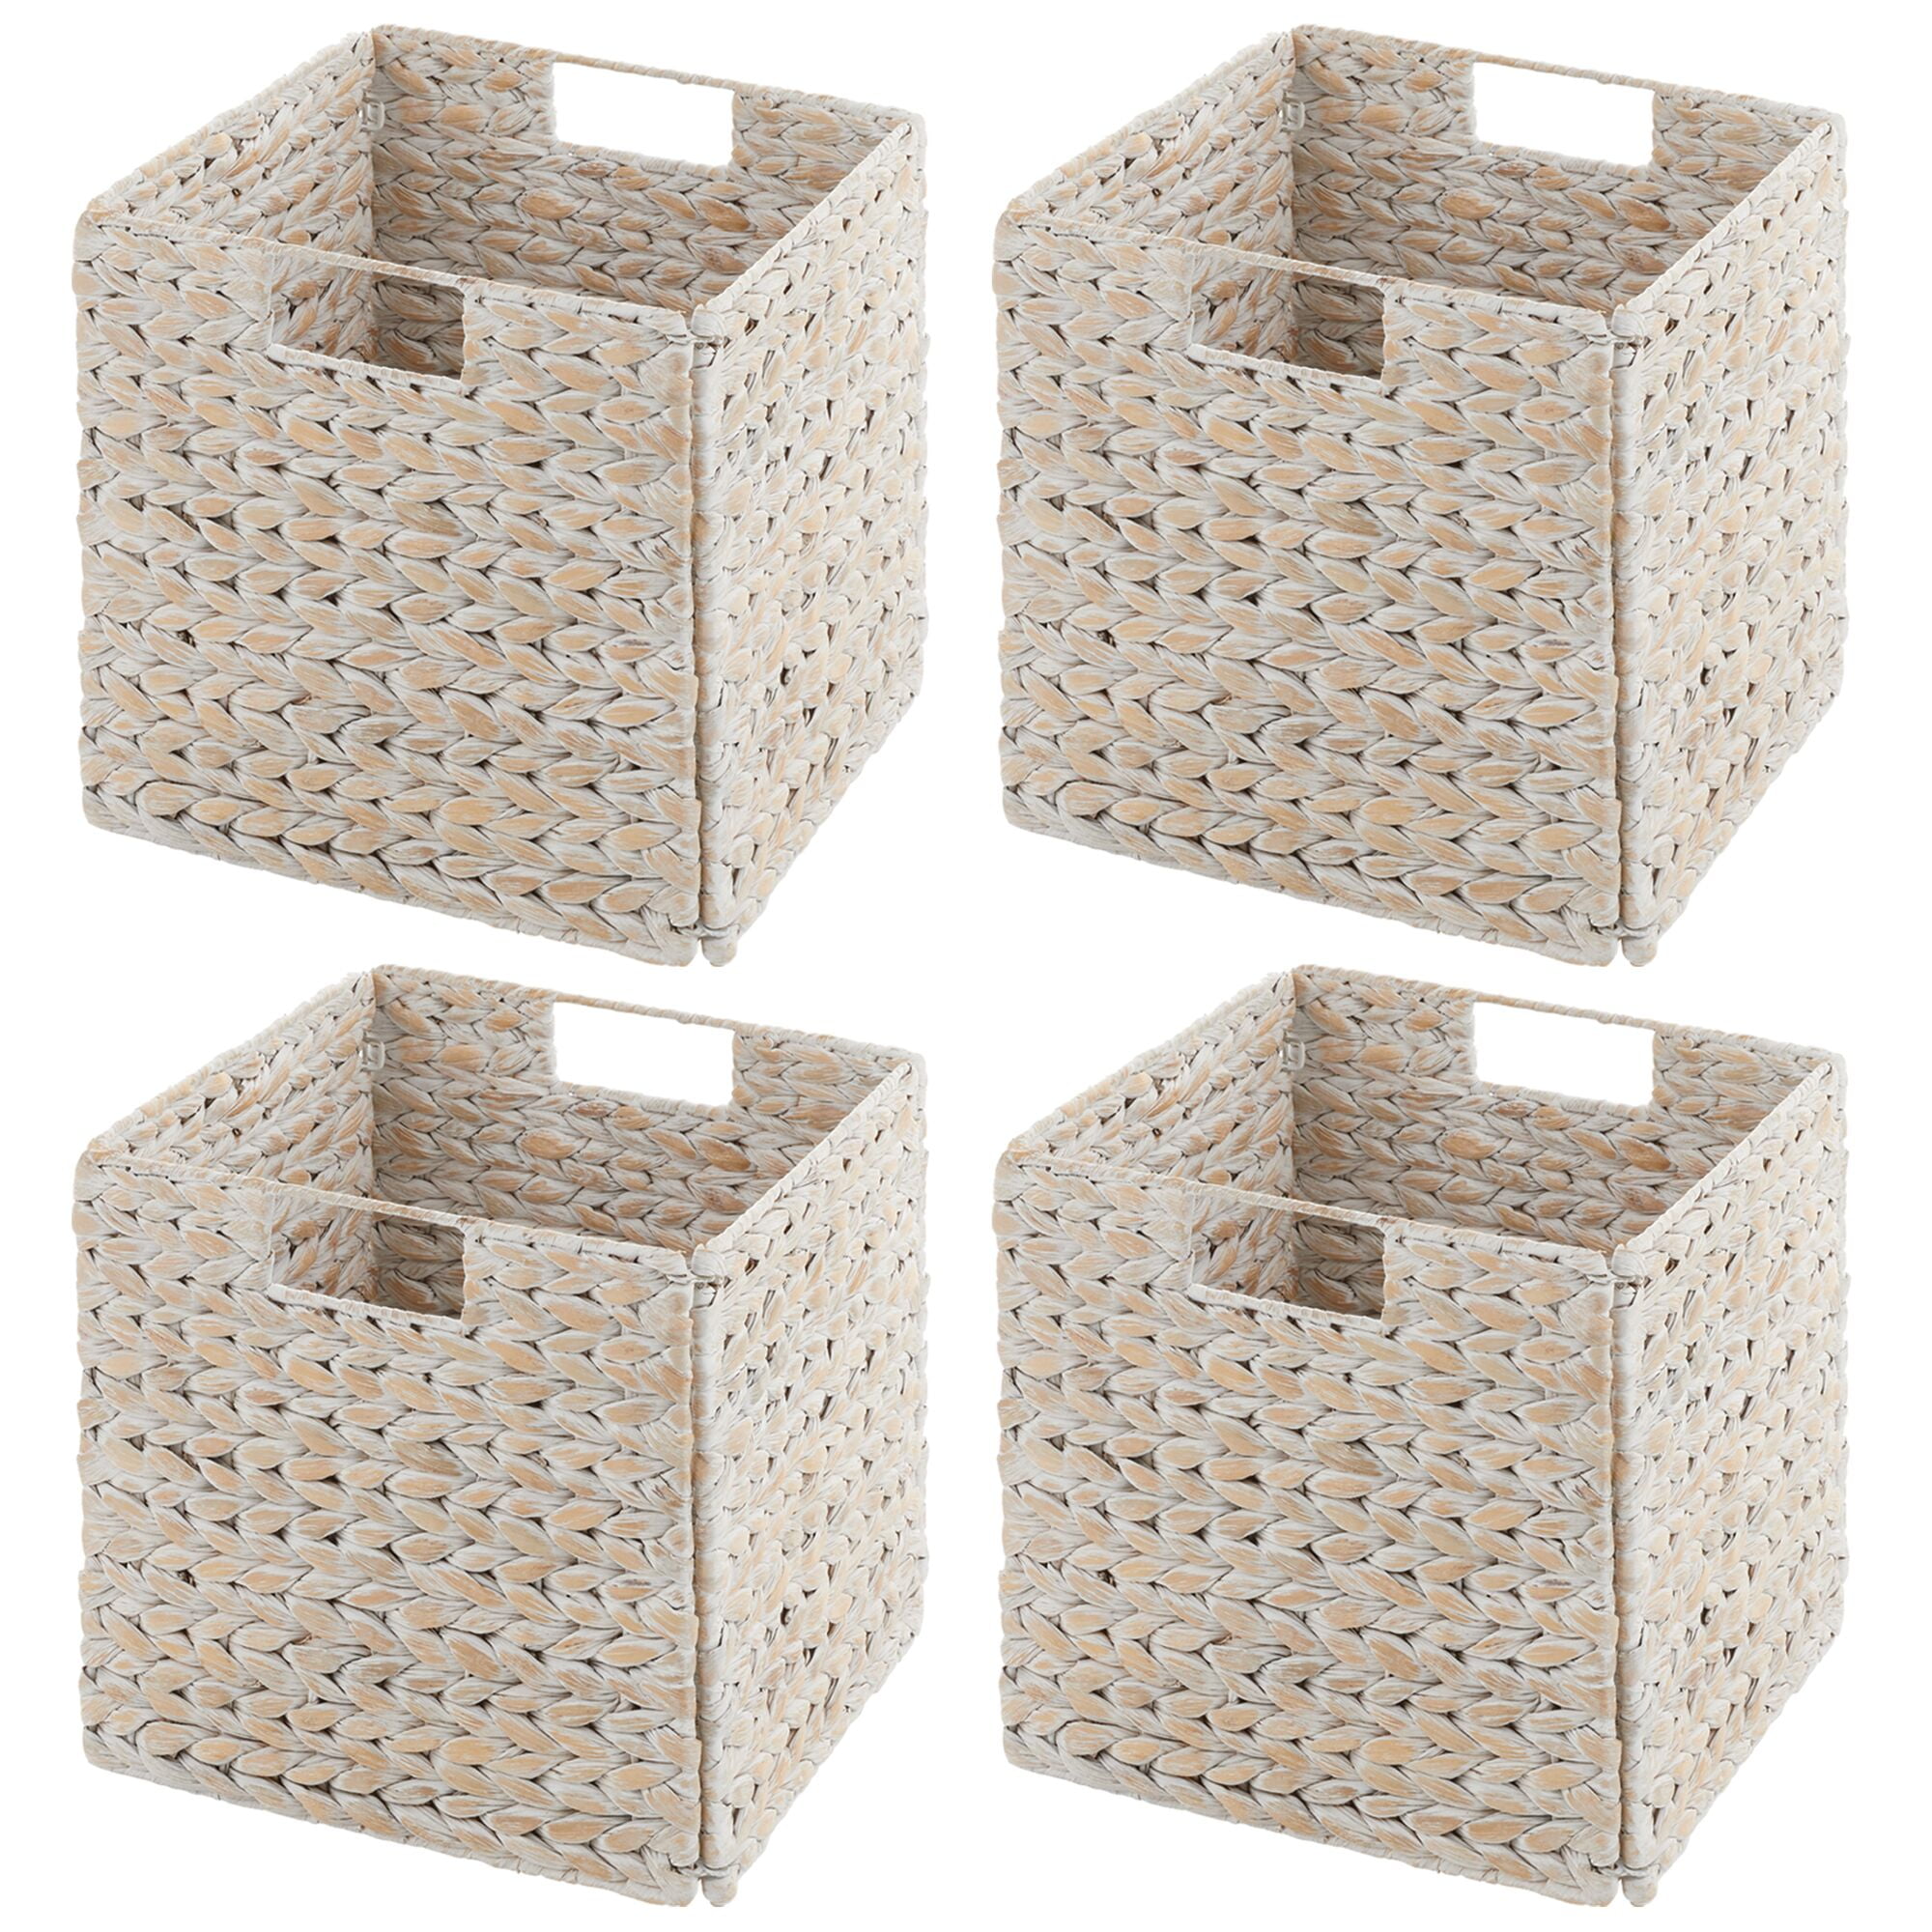 3ct mDesign Woven Farmhouse Kitchen Pantry Food Storage Basket Box, 3 Pack, White